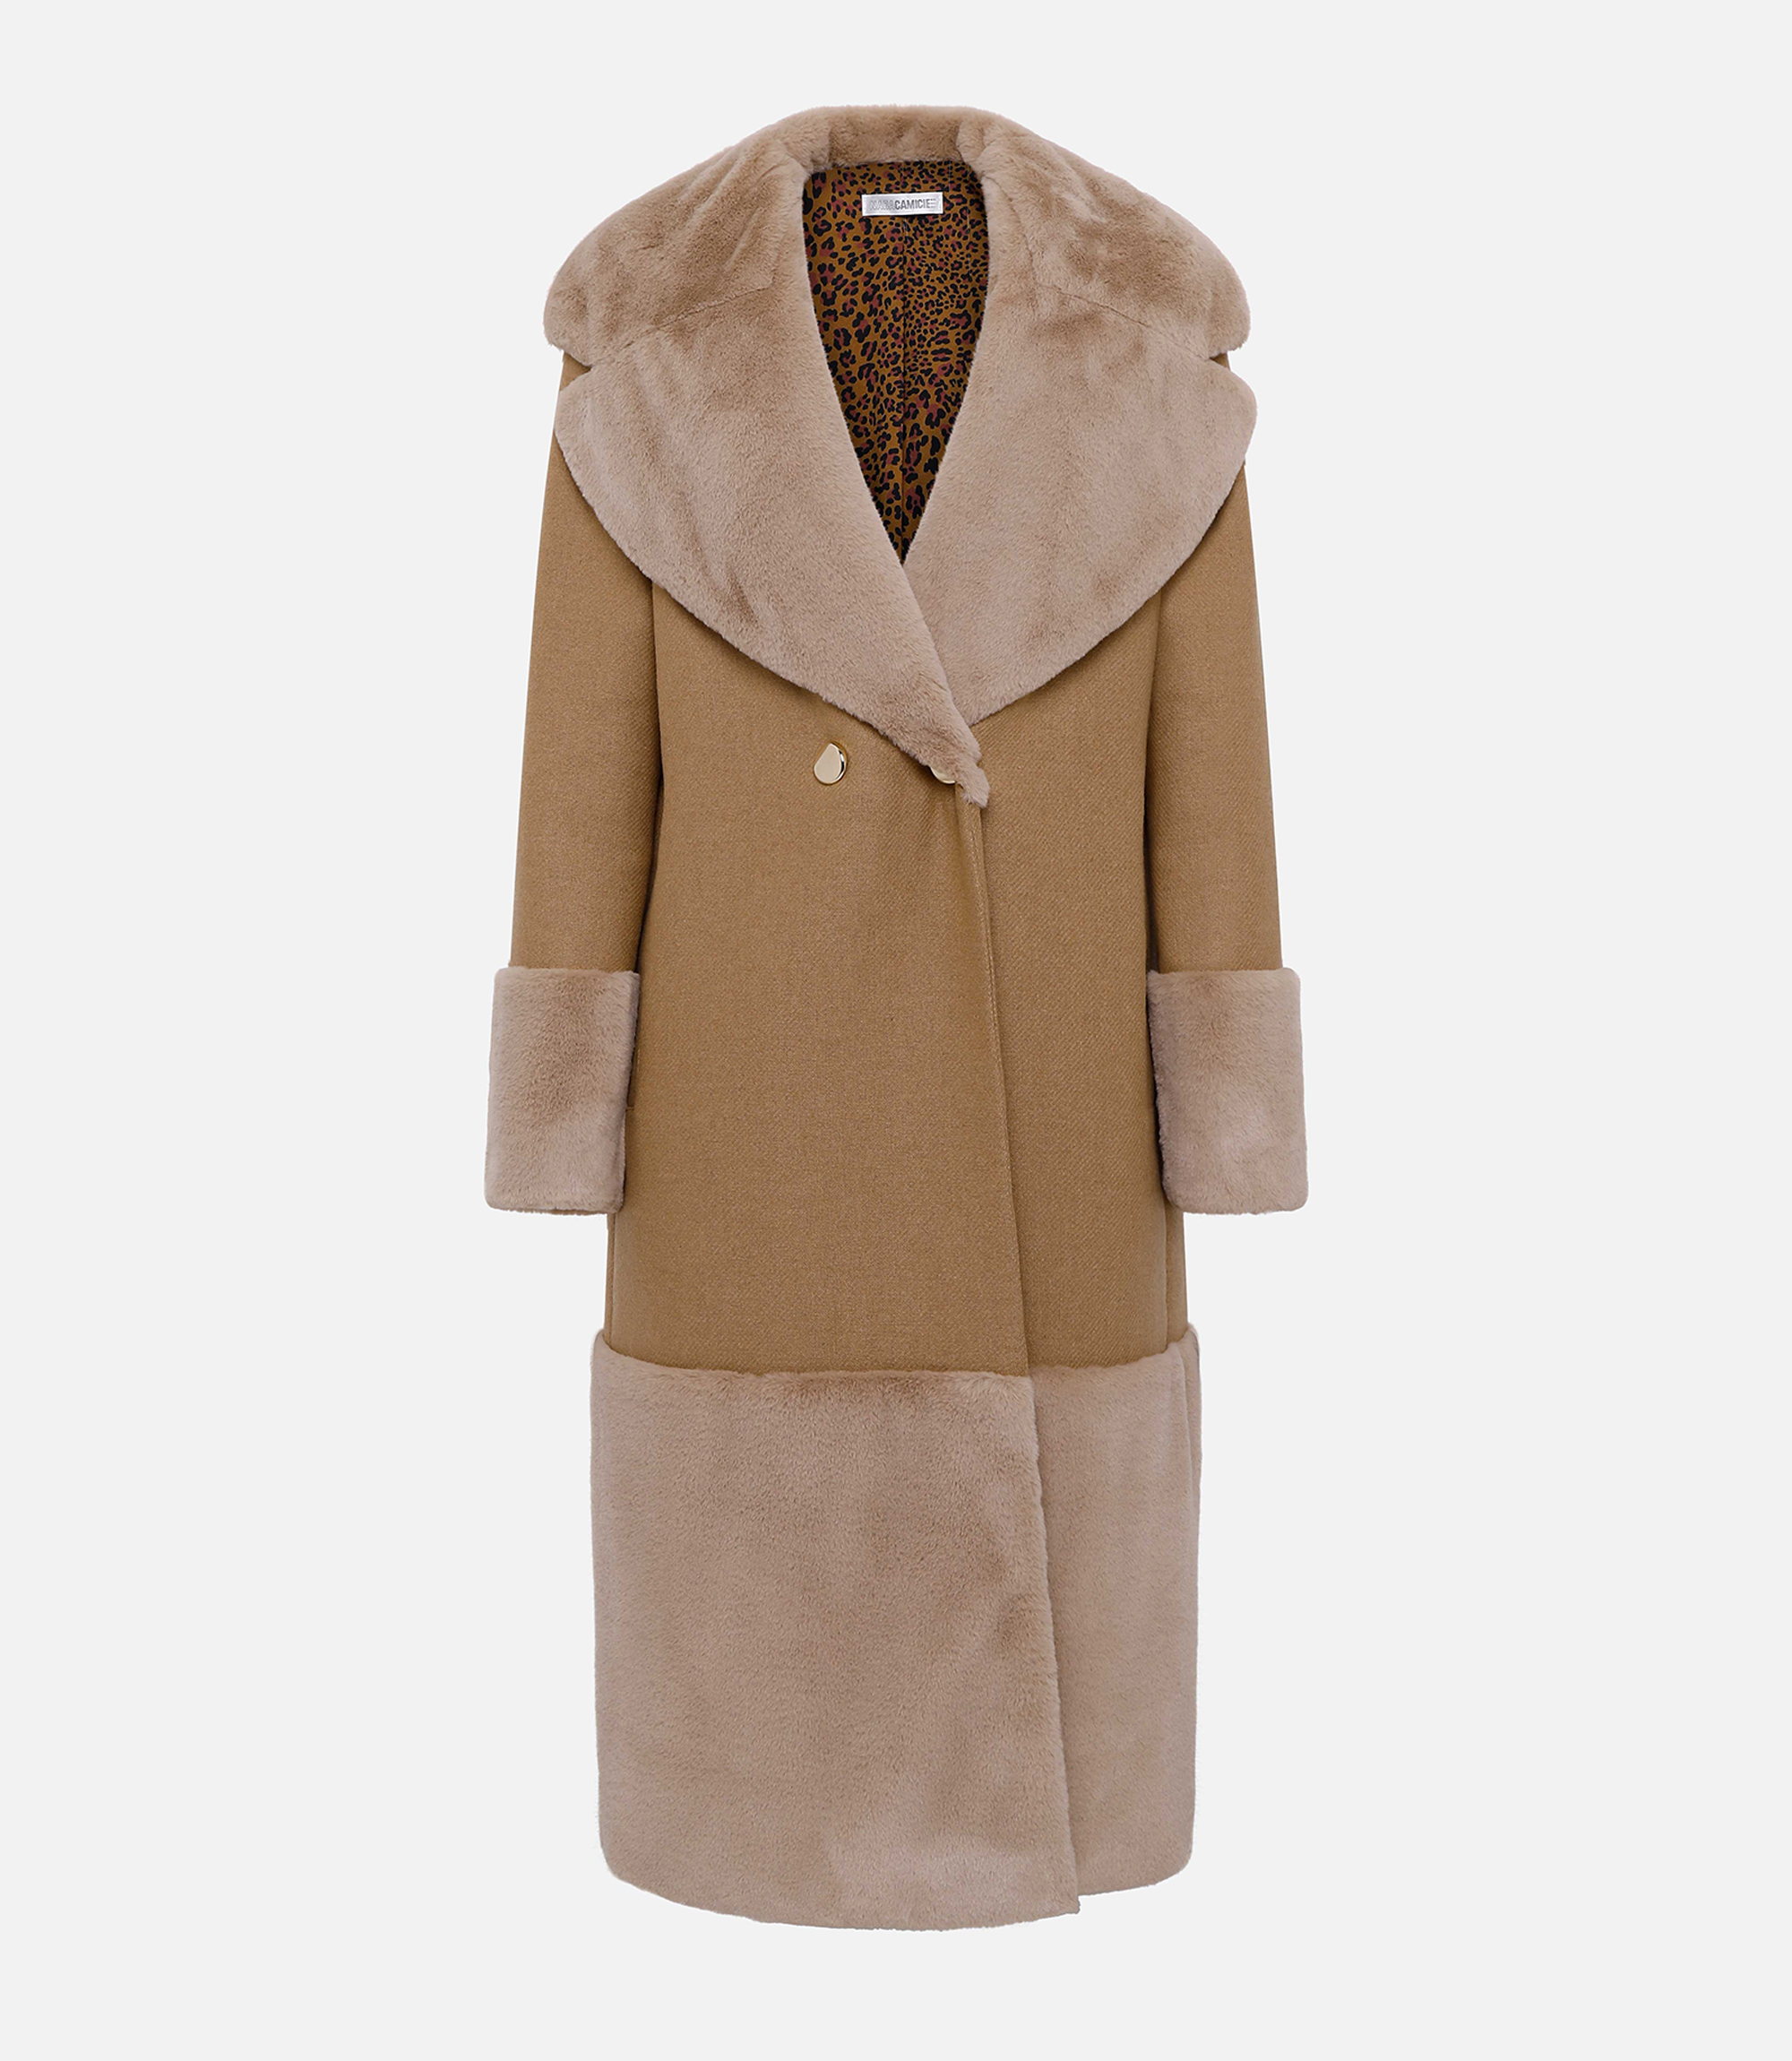 Coat with eco fur inserts - CLOTHING - Nara Milano